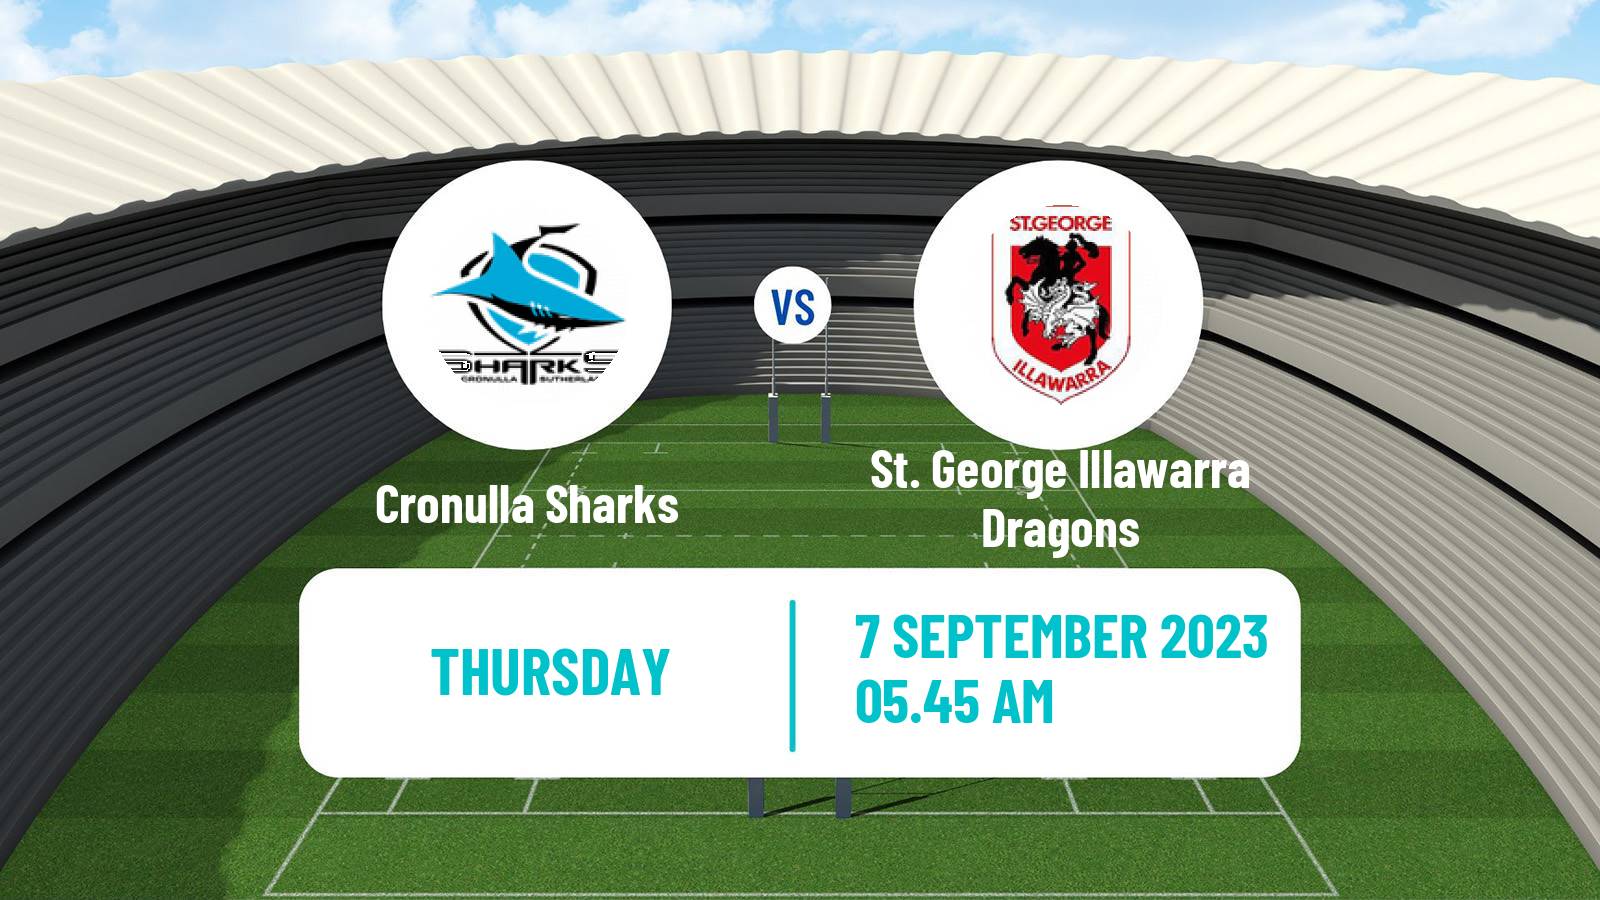 Rugby league Australian Premiership Rugby League Women Cronulla Sharks - St. George Illawarra Dragons